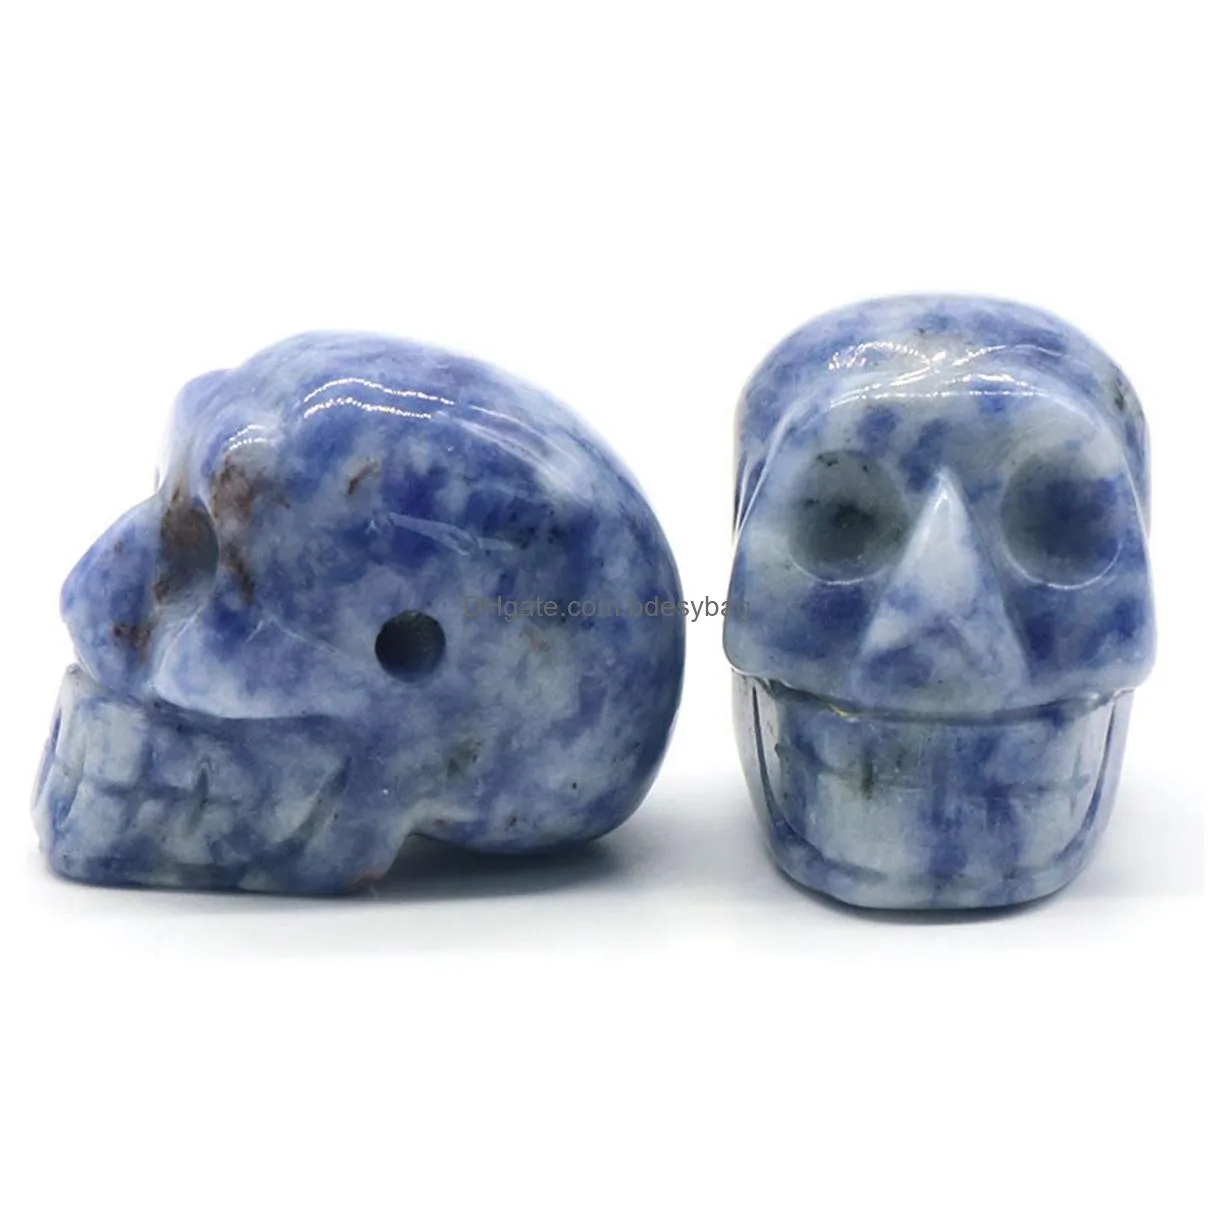 23mm natural carnelian skull figurine reiki healing energy stones ornaments carved statue gemstone home decor halloween gift